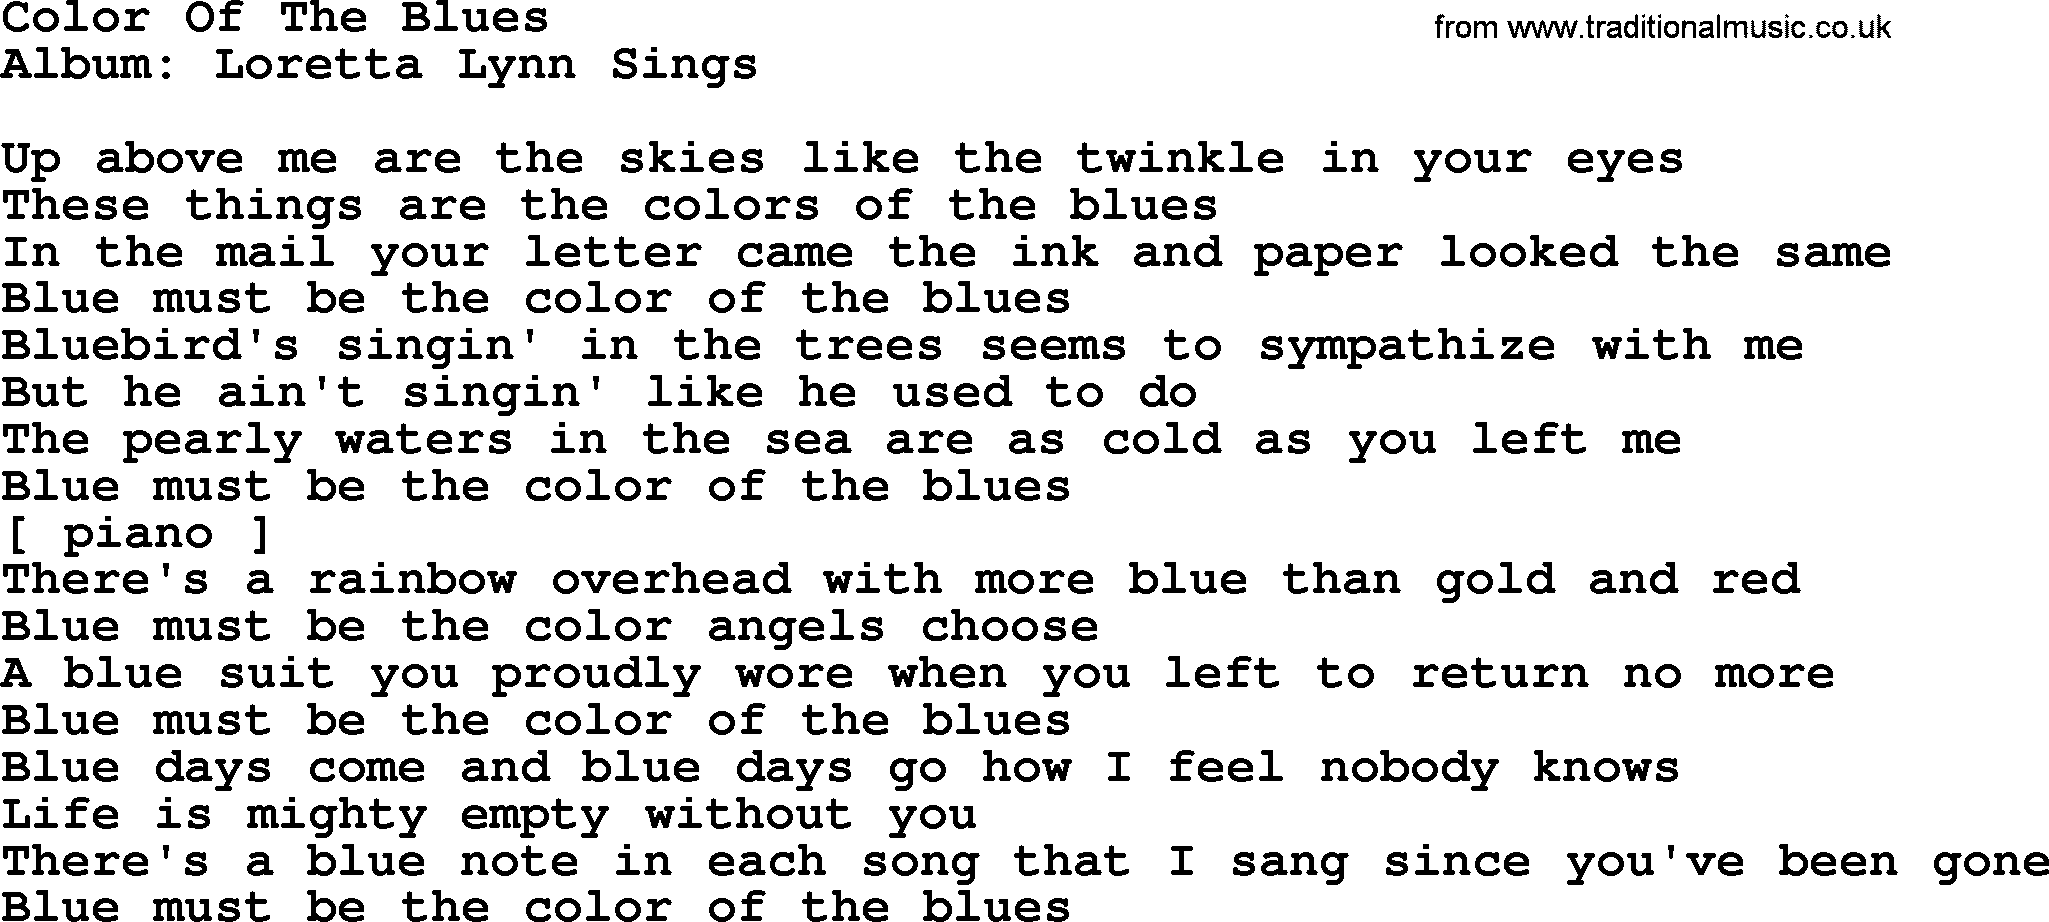 Loretta Lynn song: Color Of The Blues lyrics